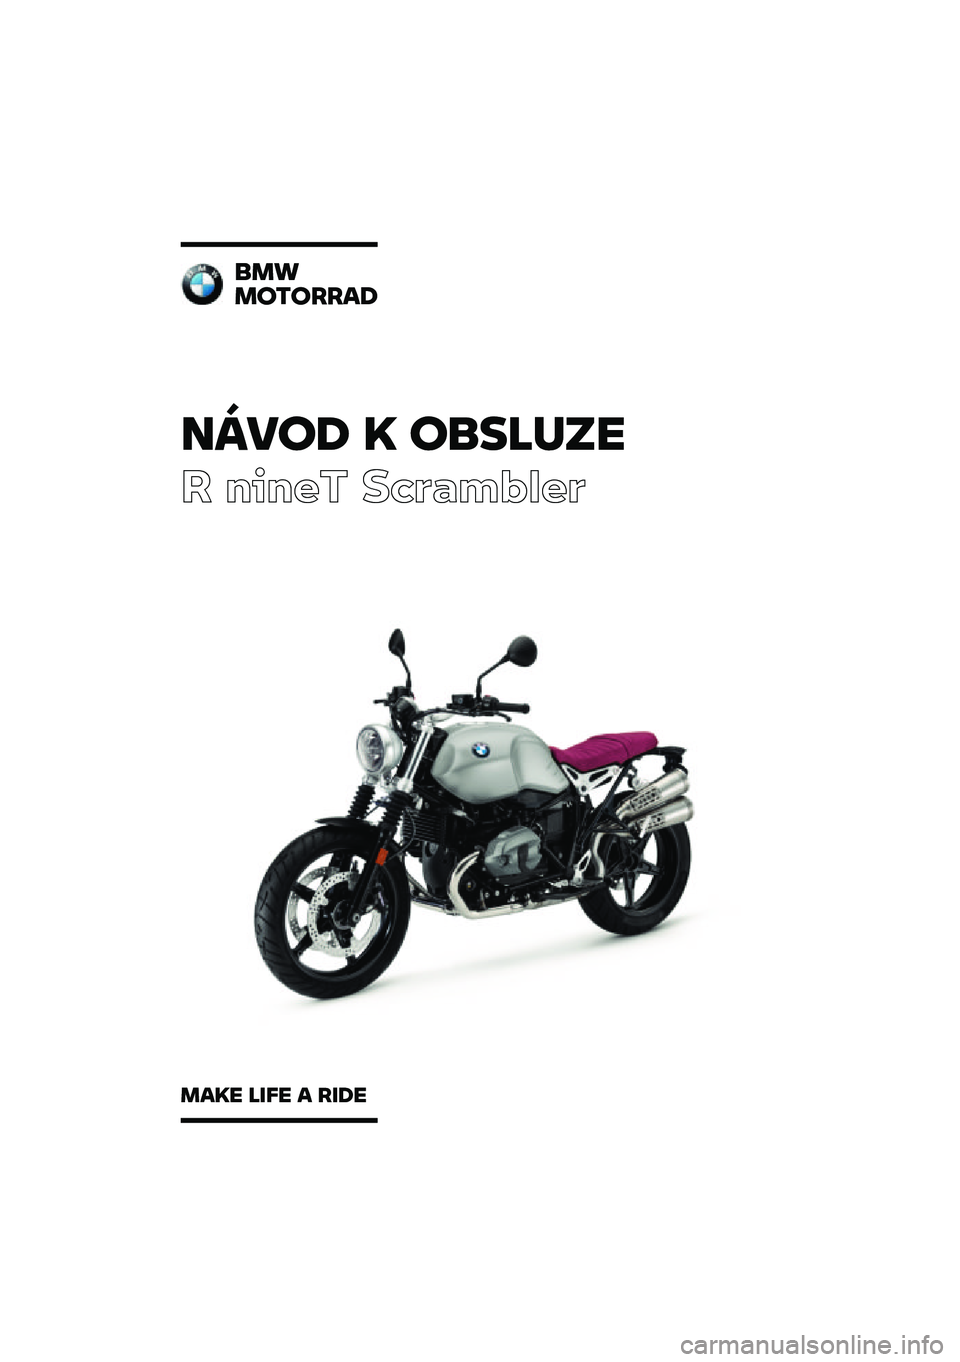 BMW MOTORRAD R NINE T SCRAMBLER 2020  Návod k obsluze (in Czech) �����\b �	 ��
��\f�
��
� ����� ��\b�	�
��\f�
��	
�
��
��������\b
���	� �\f��� � ���\b� 